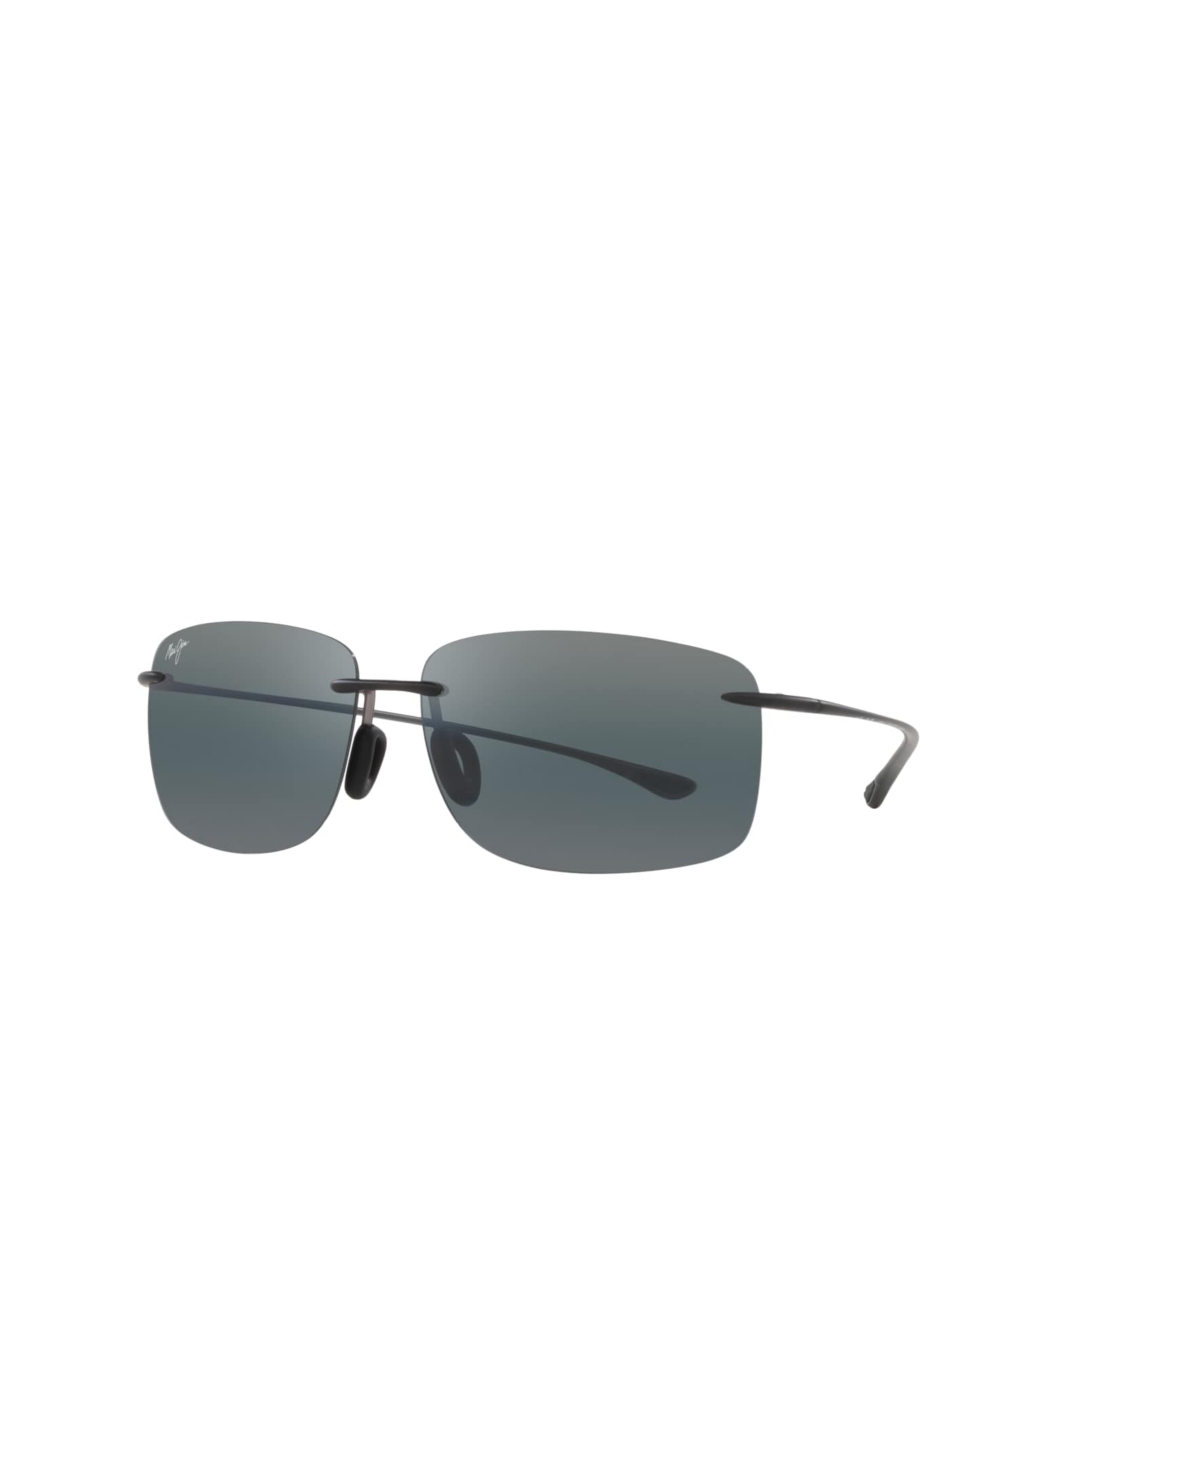 Maui Jim Unisex Polarized Sunglasses, Hema Mj000703 In Metallic